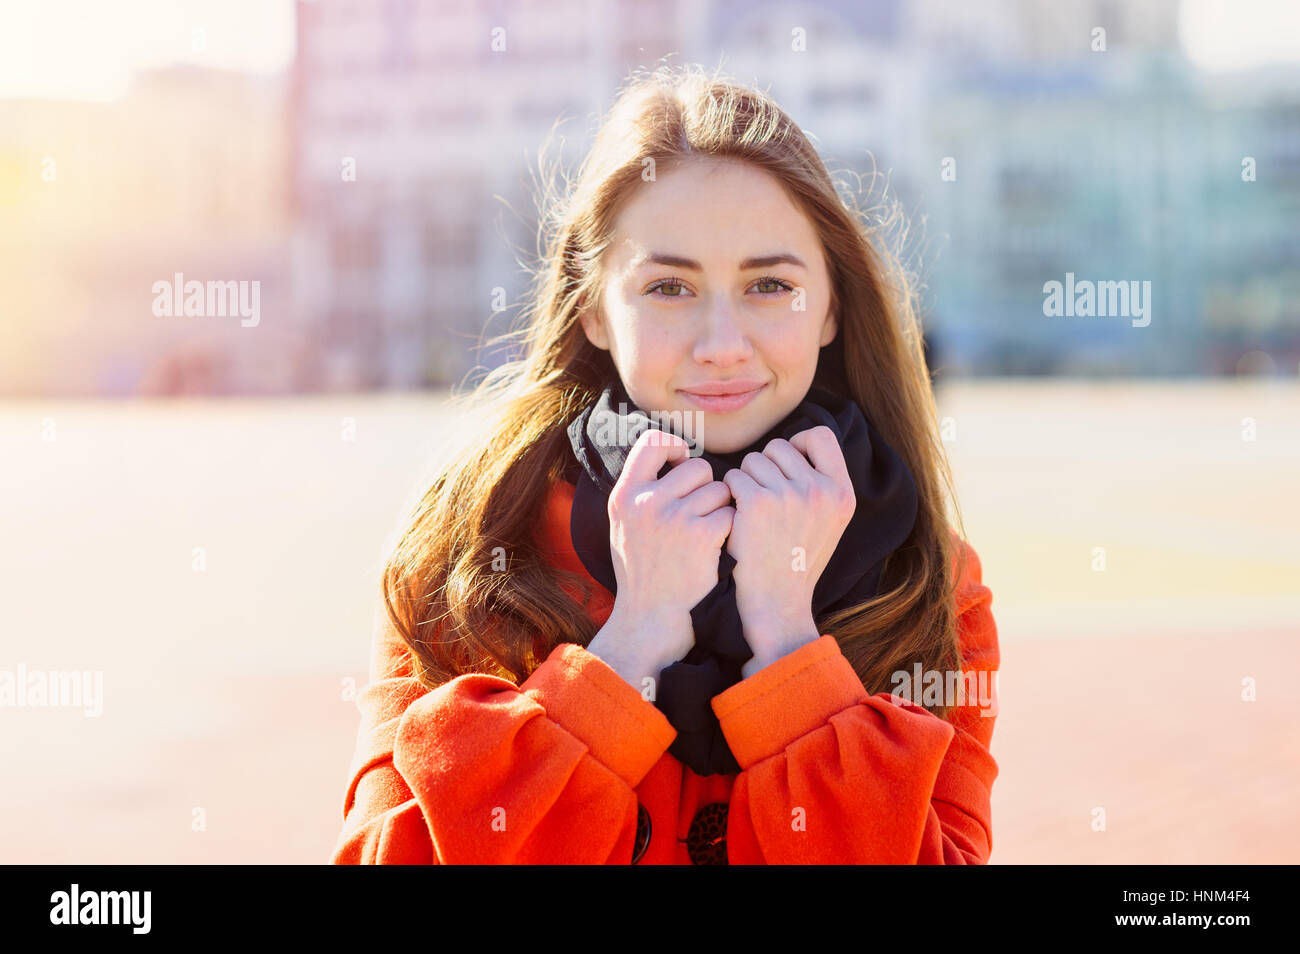 Beautiful young woman in orange coat walking in the city Stock Photo